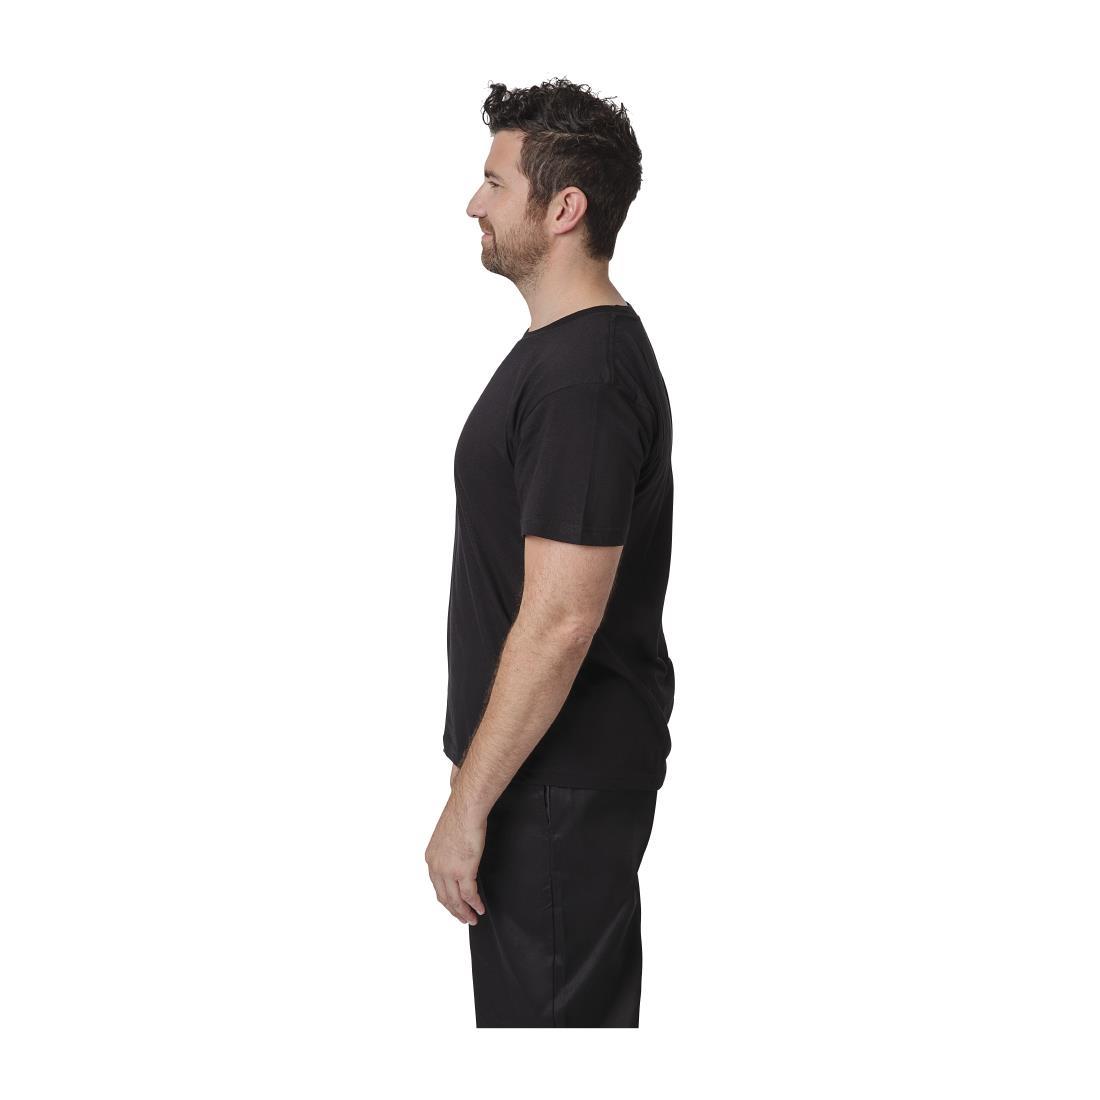 Unisex Chef T-Shirt Black 2XL - A295-2XL  - 4